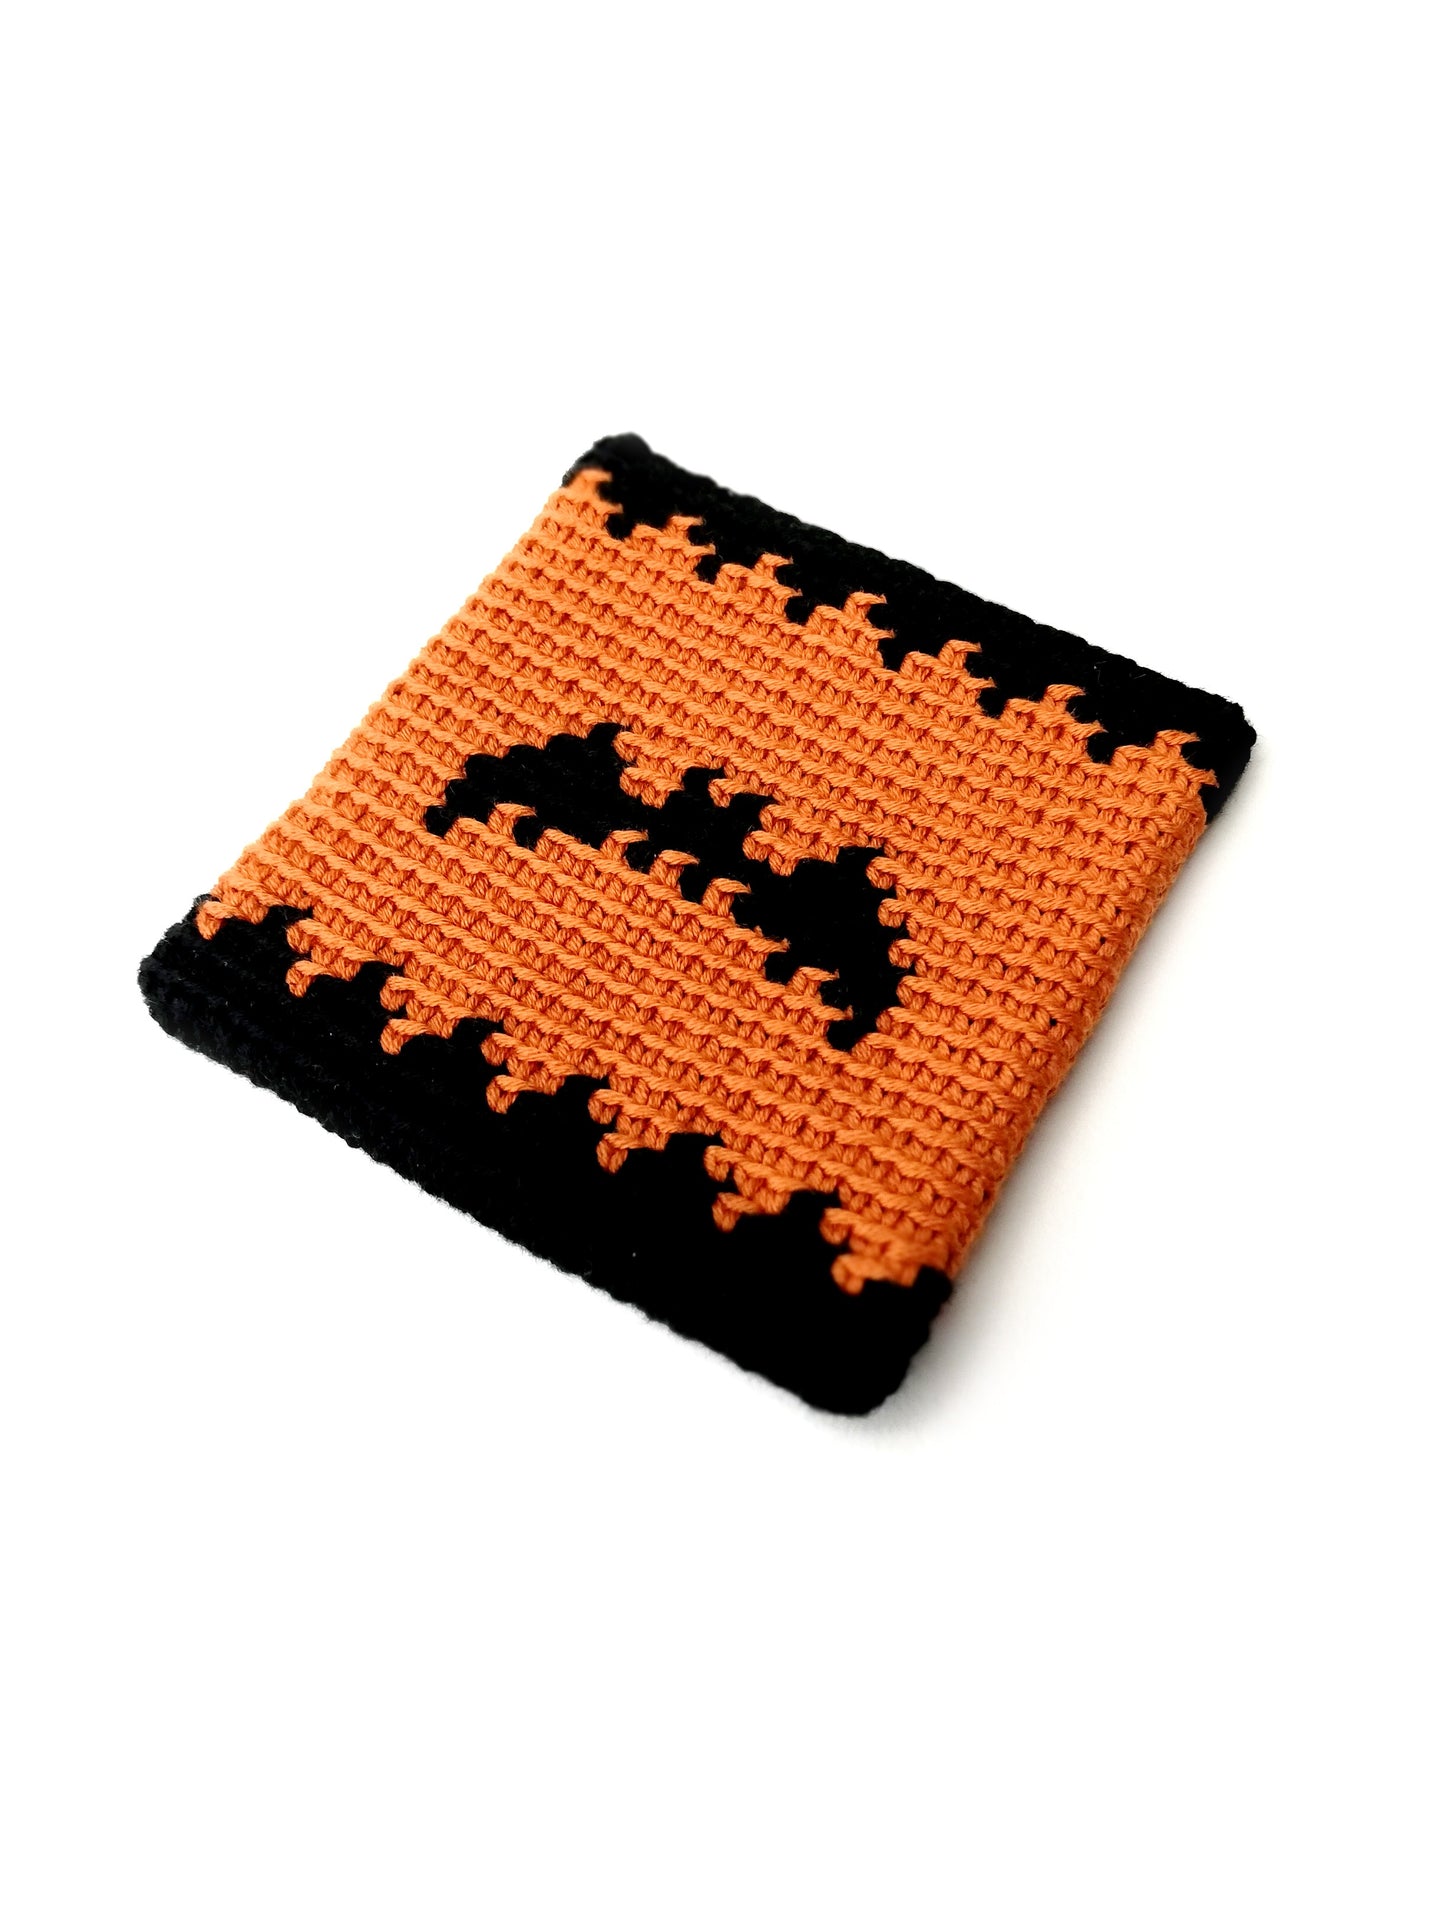 Spooky Halloween coaster with a bat